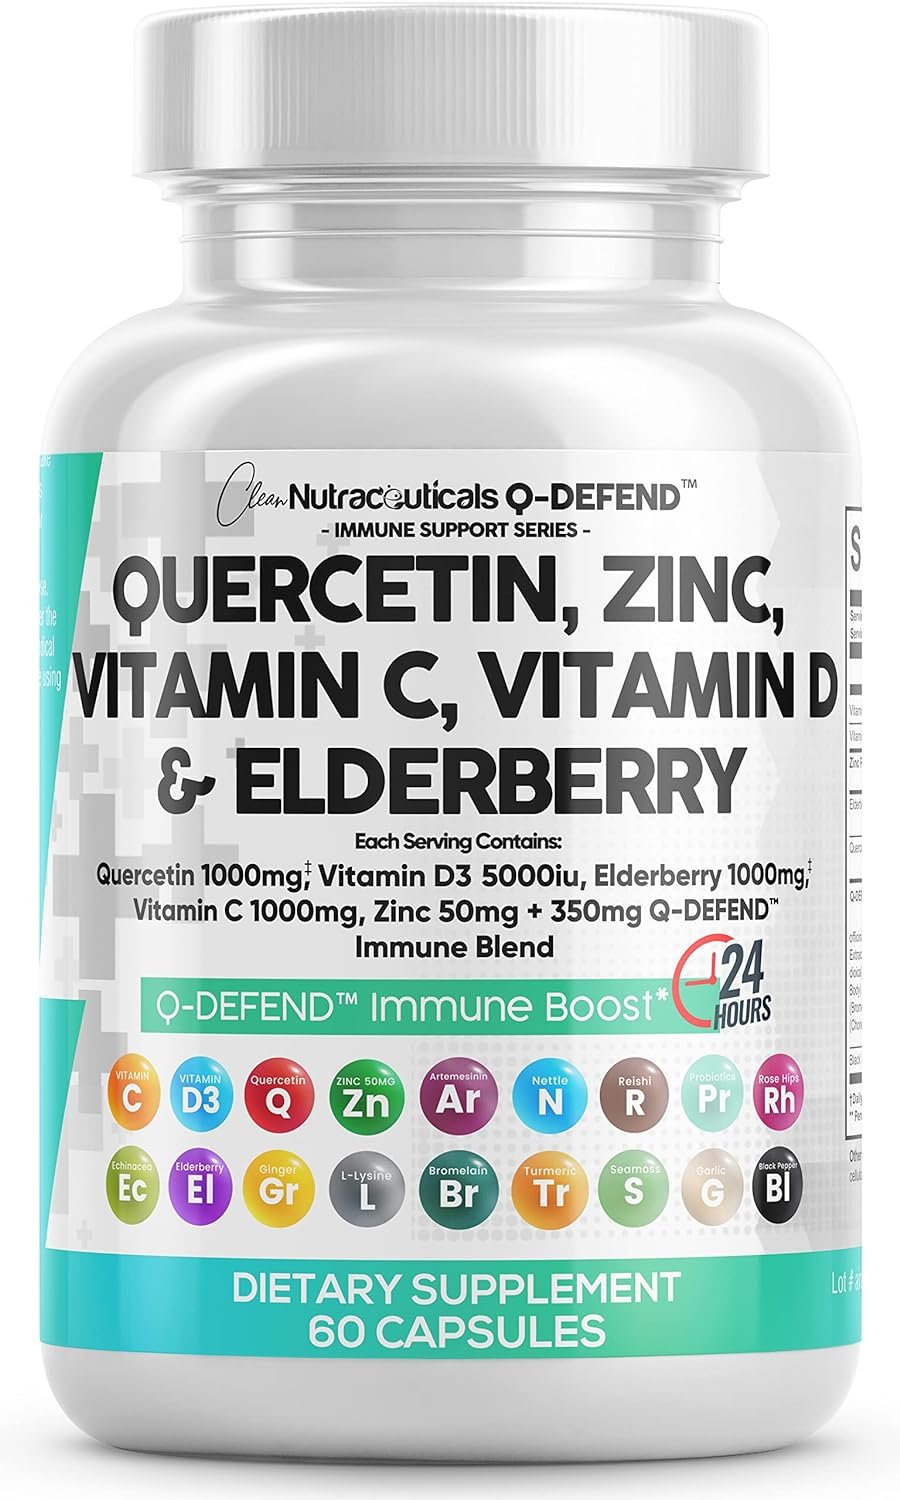 Clean Nutraceuticals Quercetin 1000mg Zinc 50mg Vitamin C 1000mg Vitamin D 5000 IU Bromelain Elderberry – Lung Immune Defense Support Supplement Review